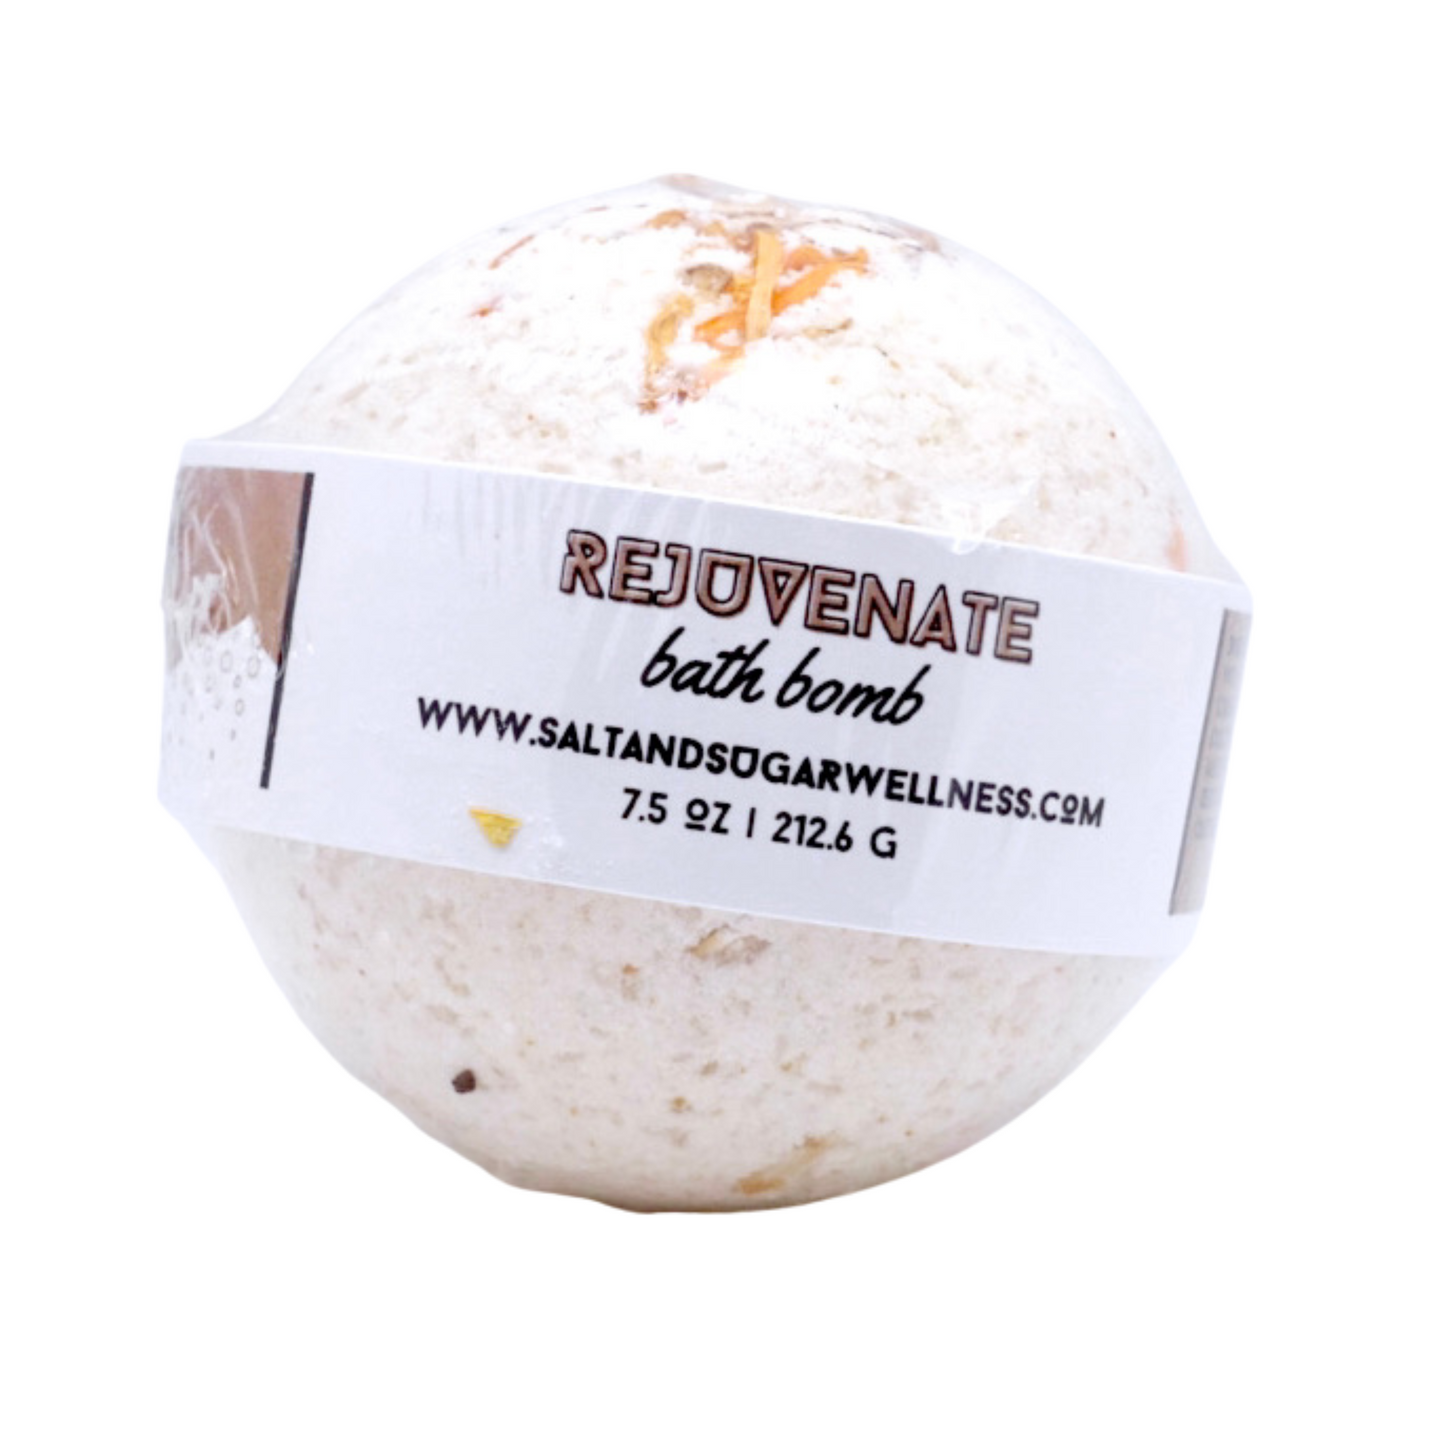 almond coconut rejuvenate bath bomb all natural handmade